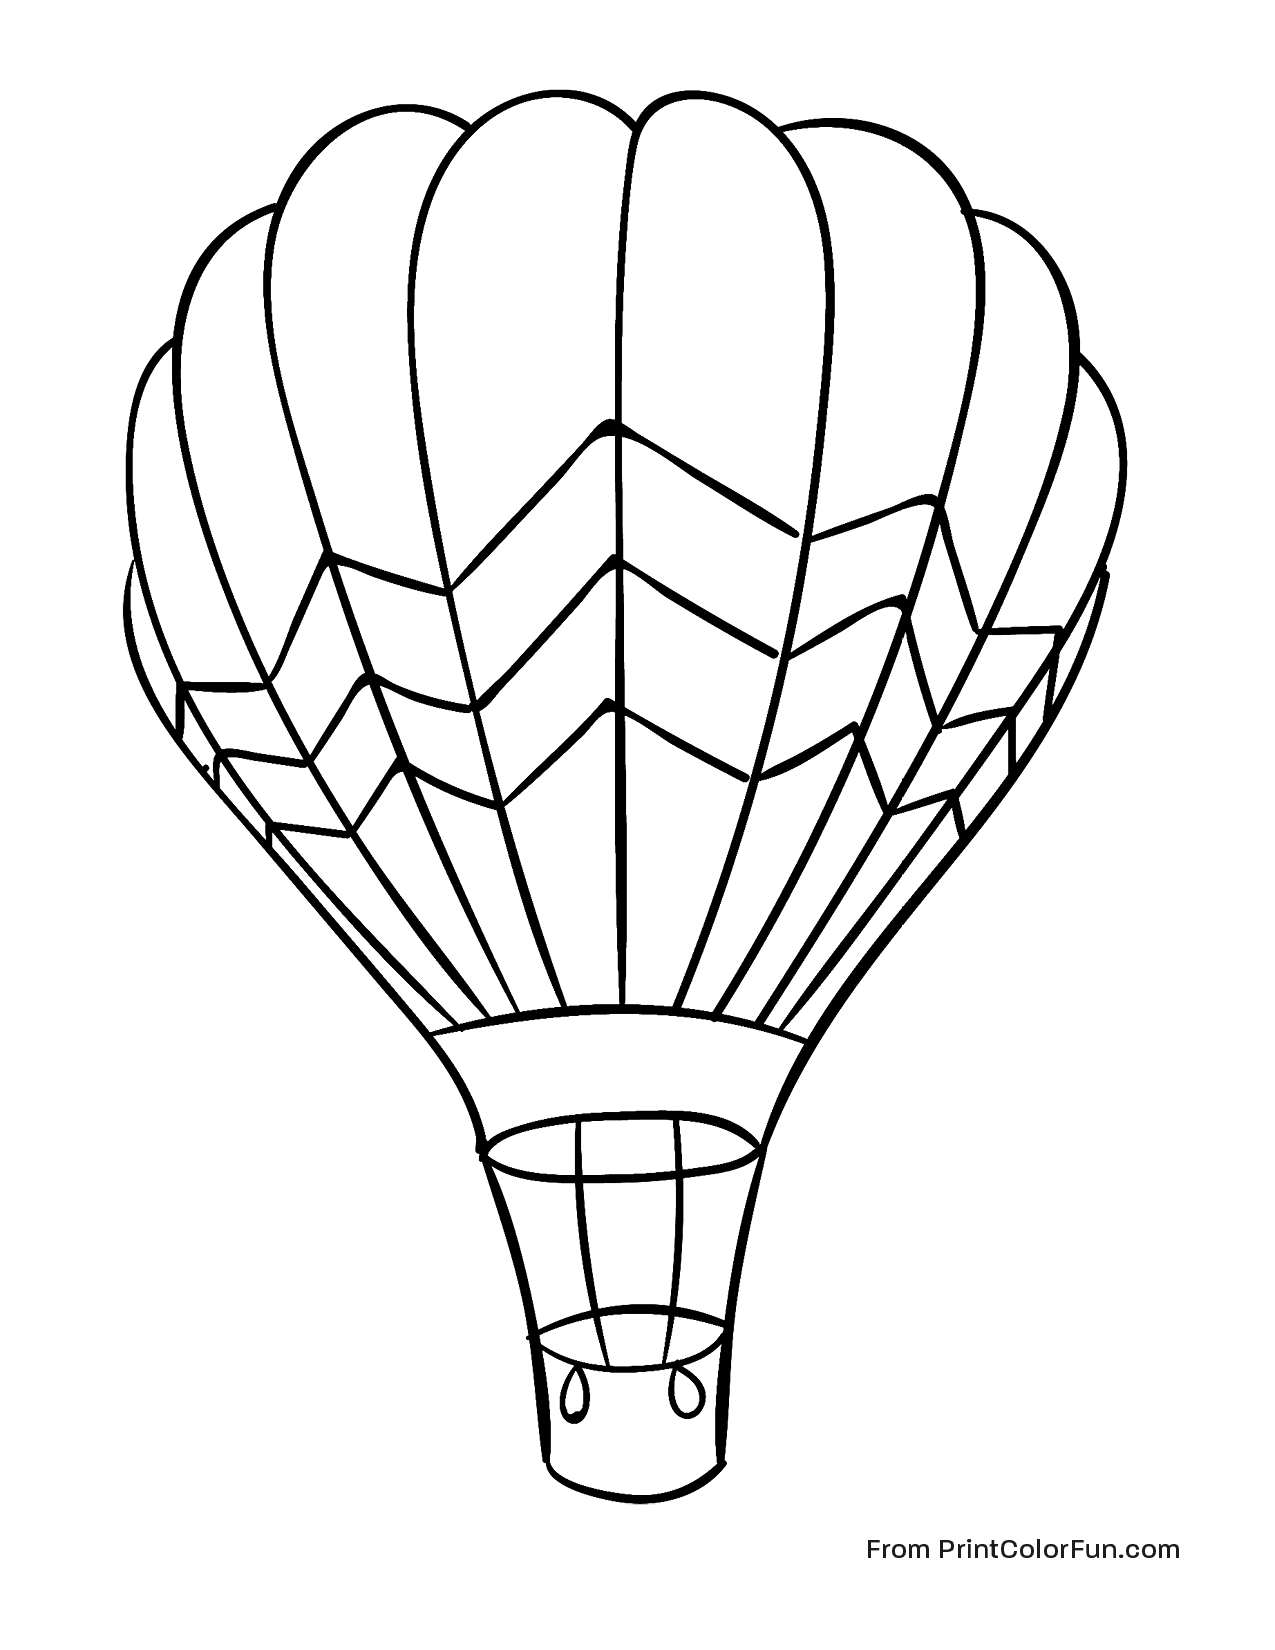 Balloon Air Coloring Hot Pages Printable Kids Drawing Sheets Adult